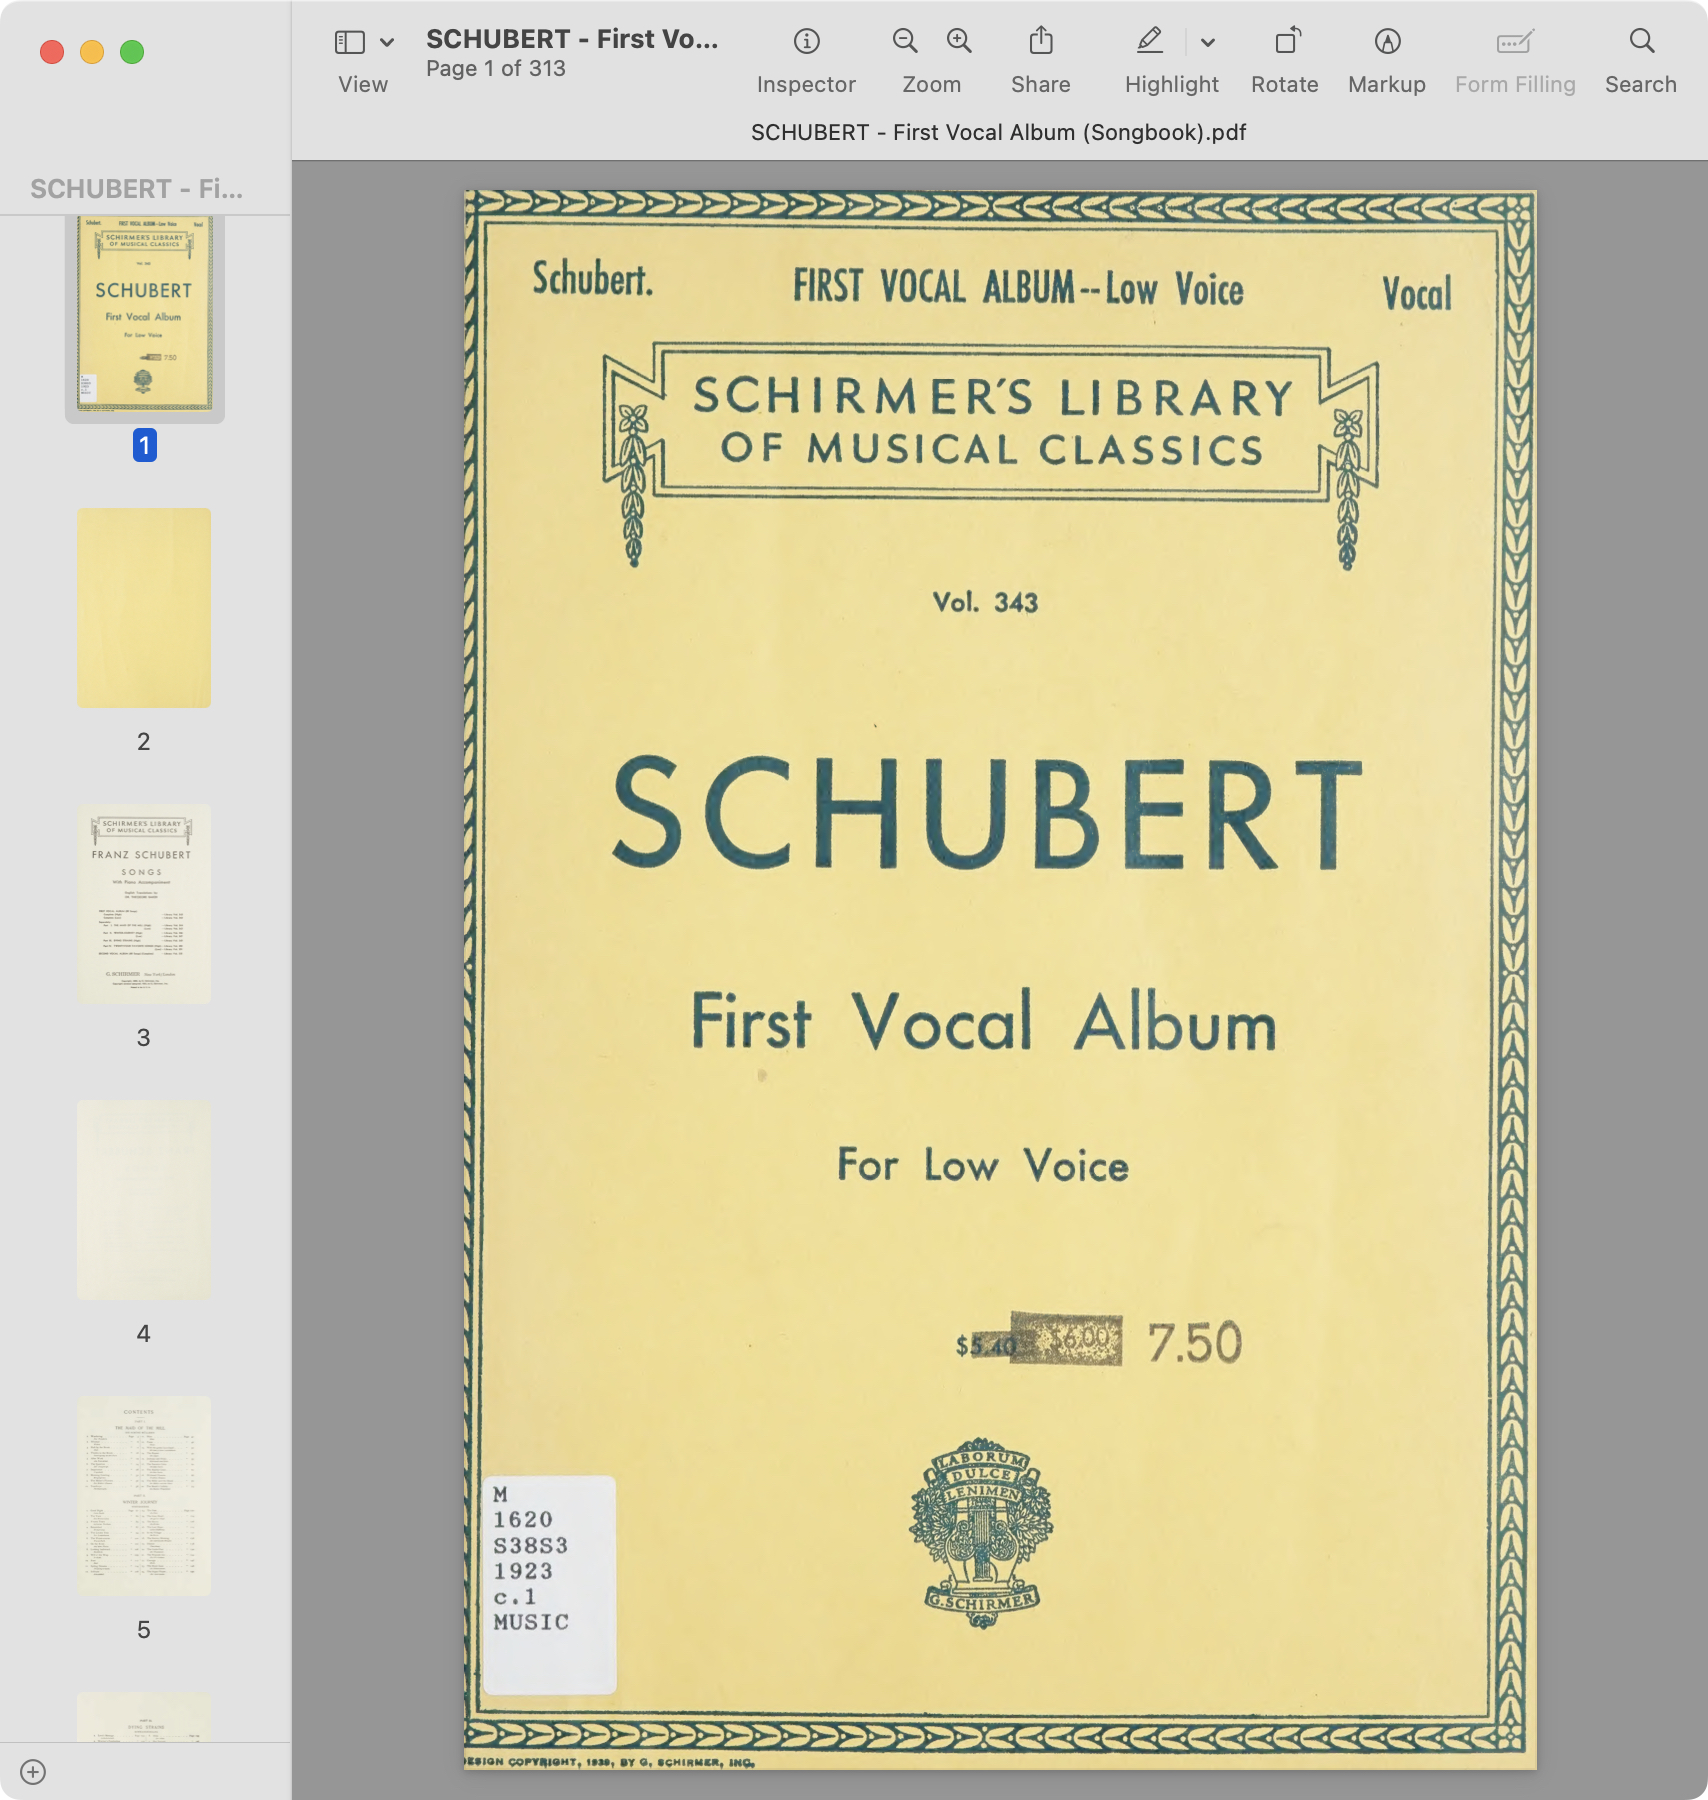 SCHUBERT - First Vocal Album (Songbook).jpg